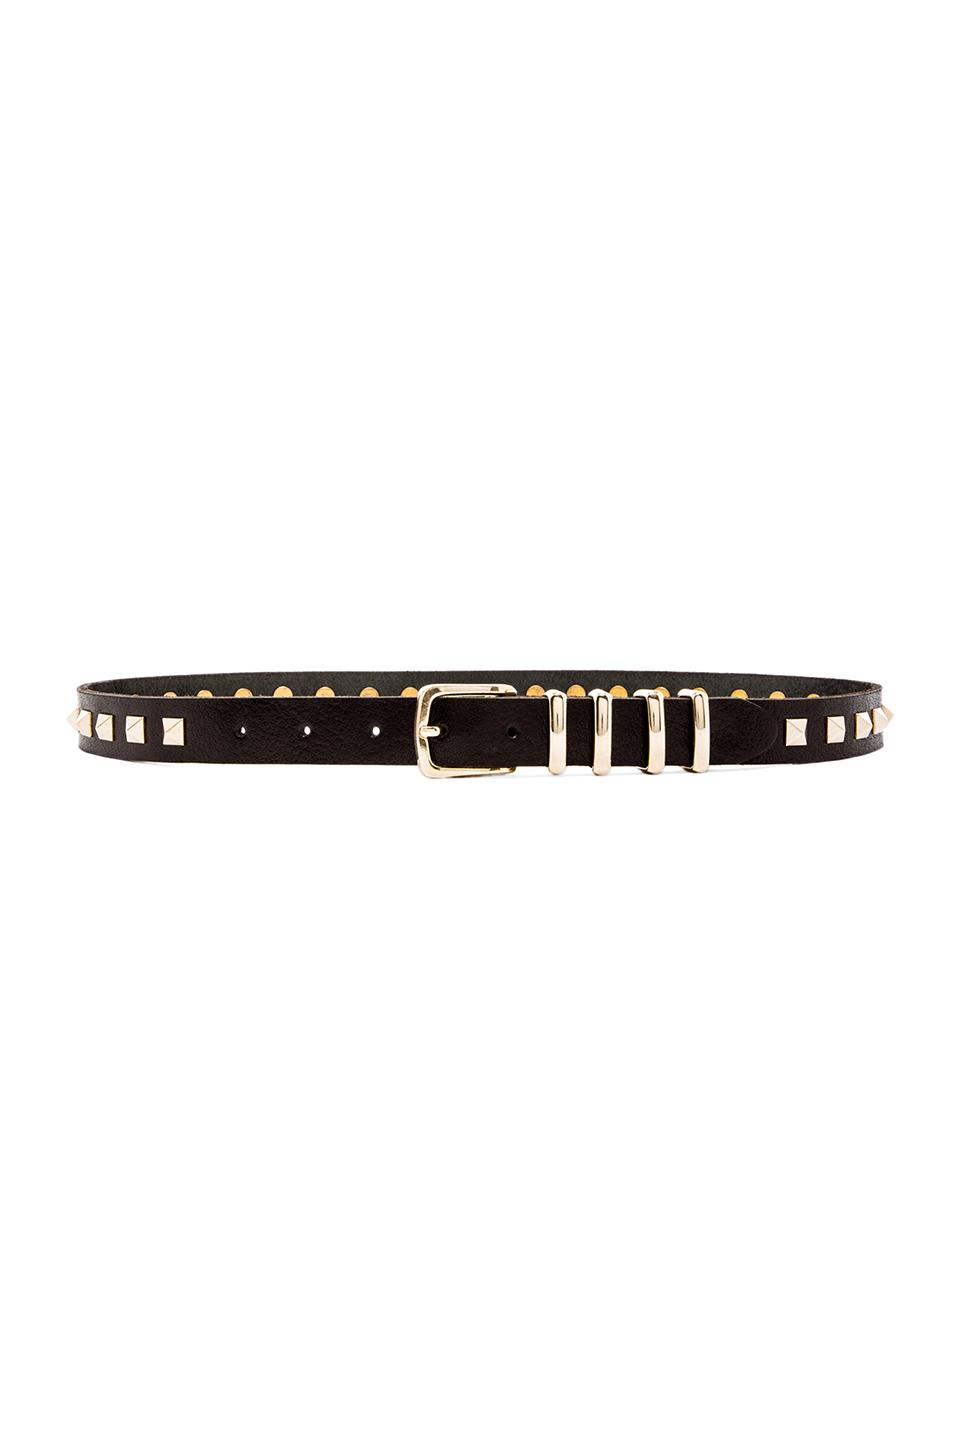 Lyst - Anine Bing Gold Studded Belt in Black